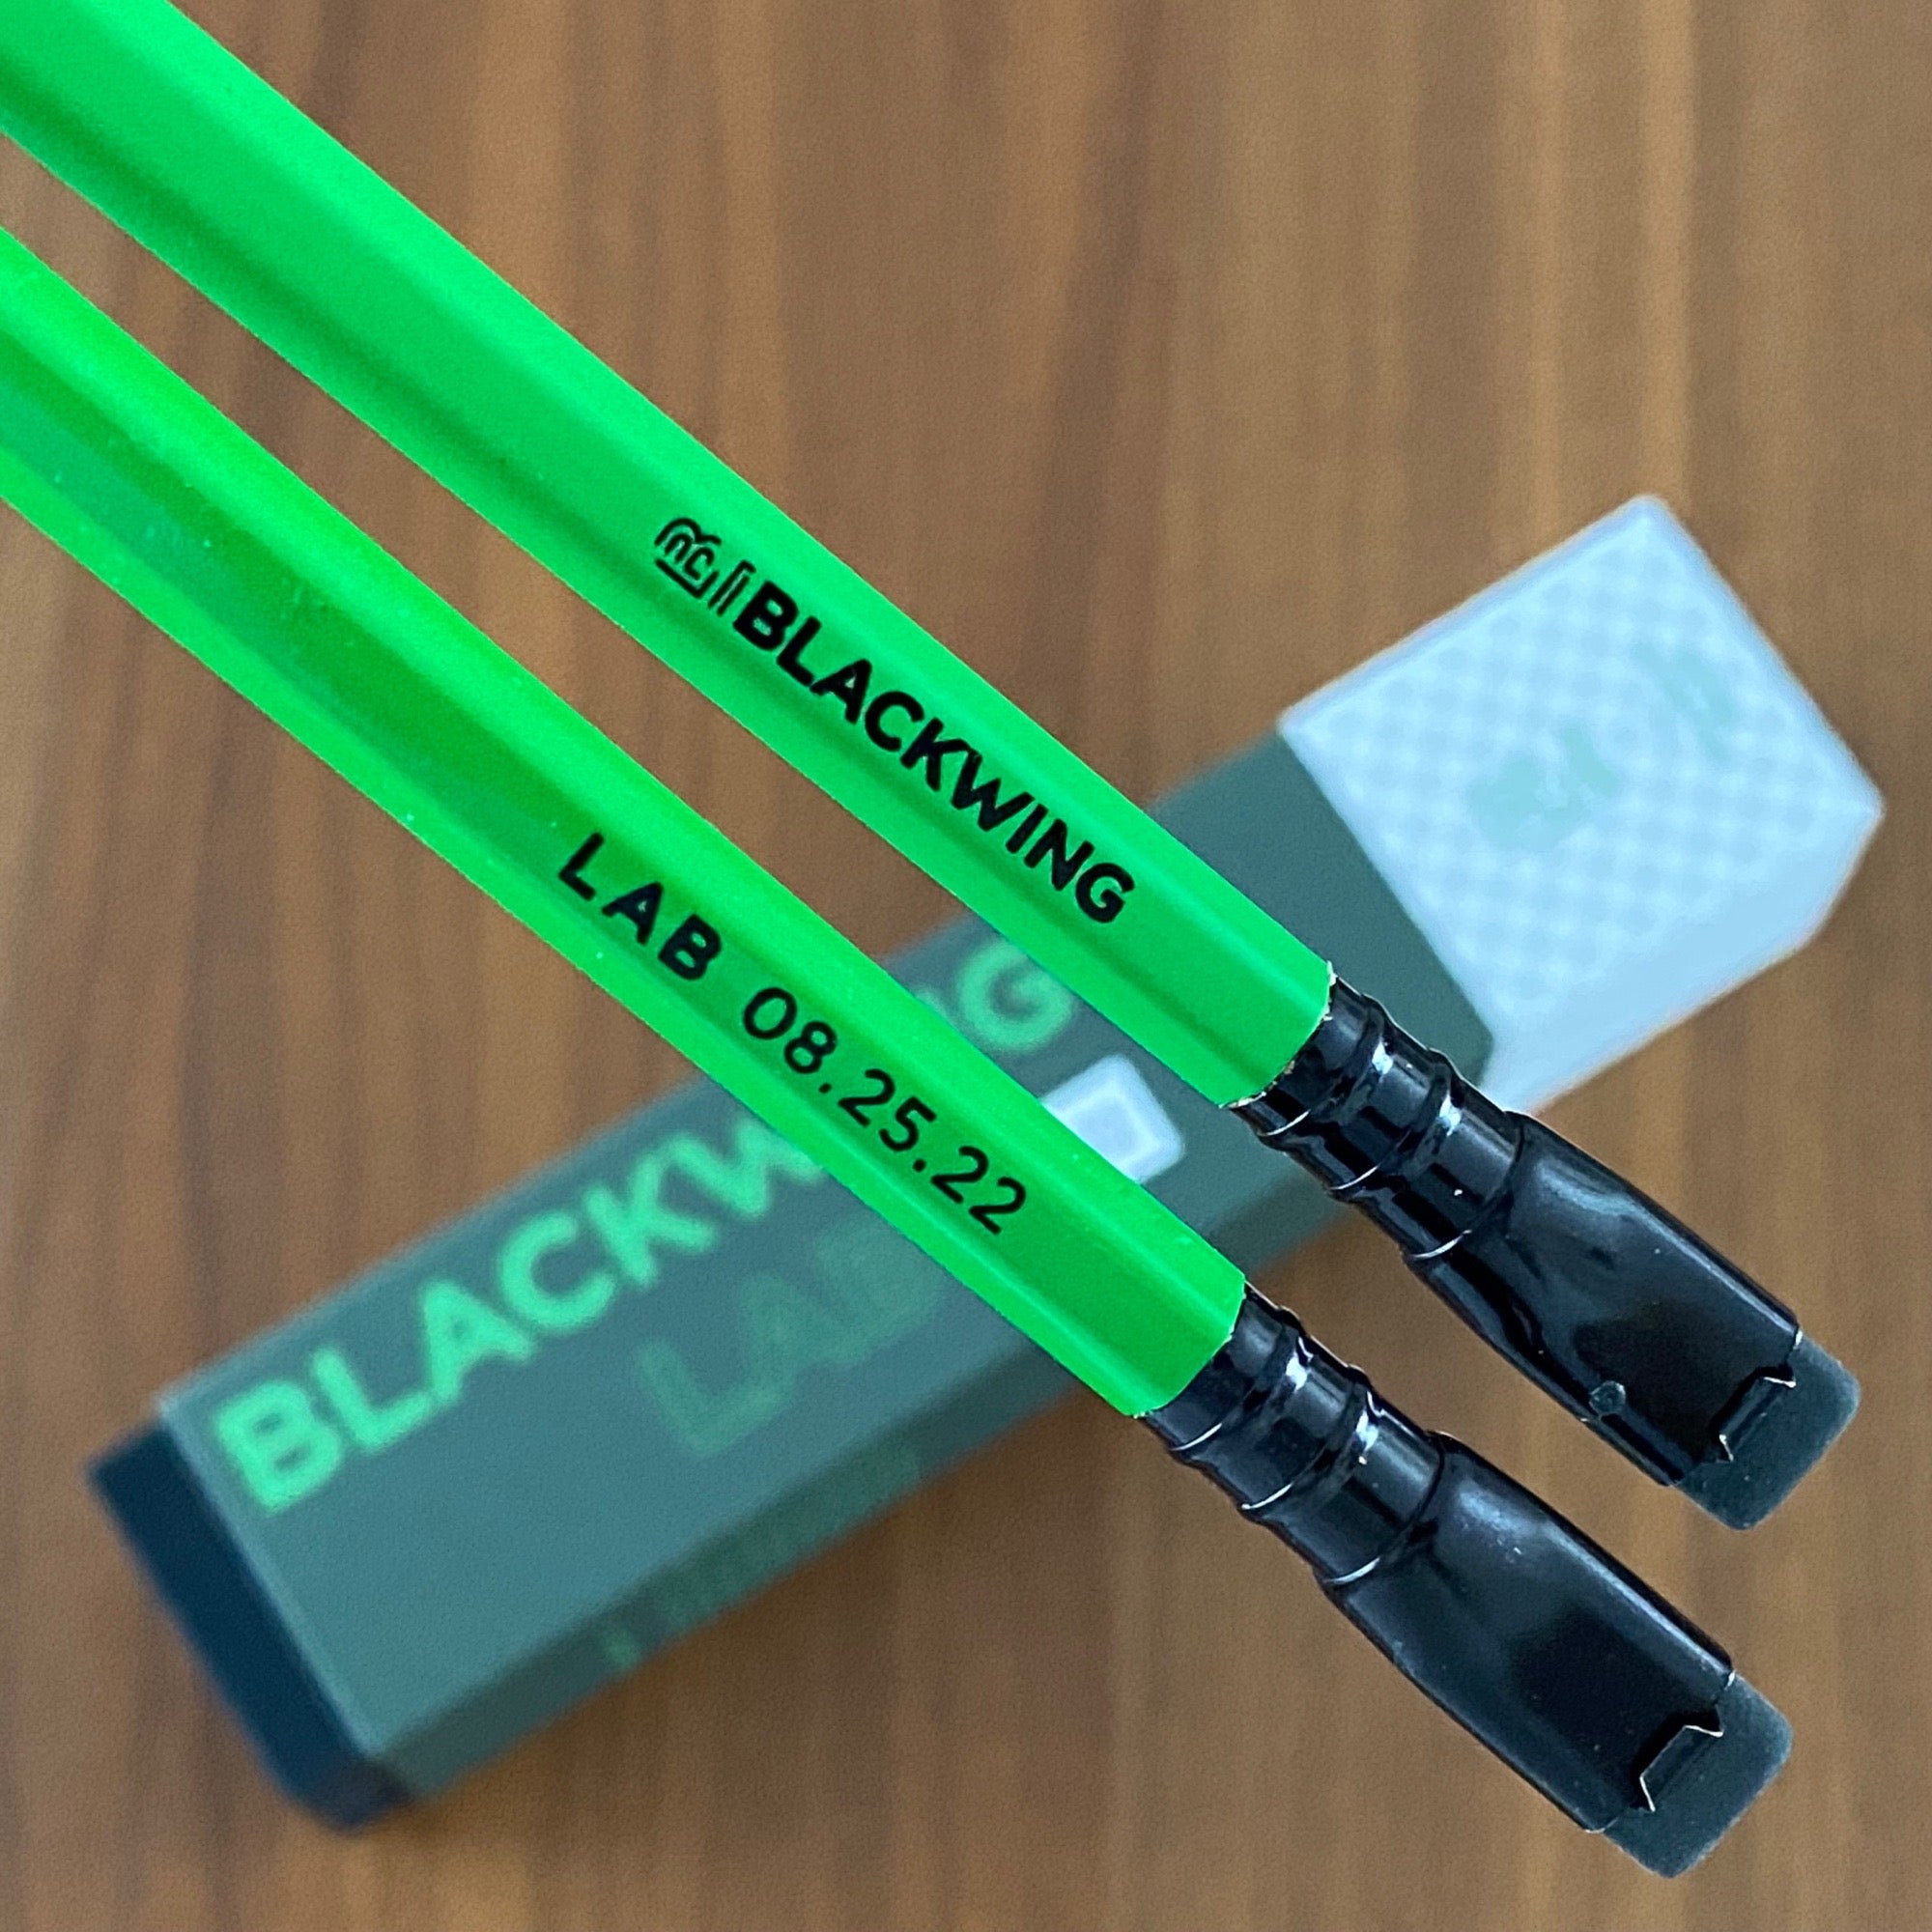 Lápiz Blackwing Lab.08.25.22 + caja original (2 lápices)